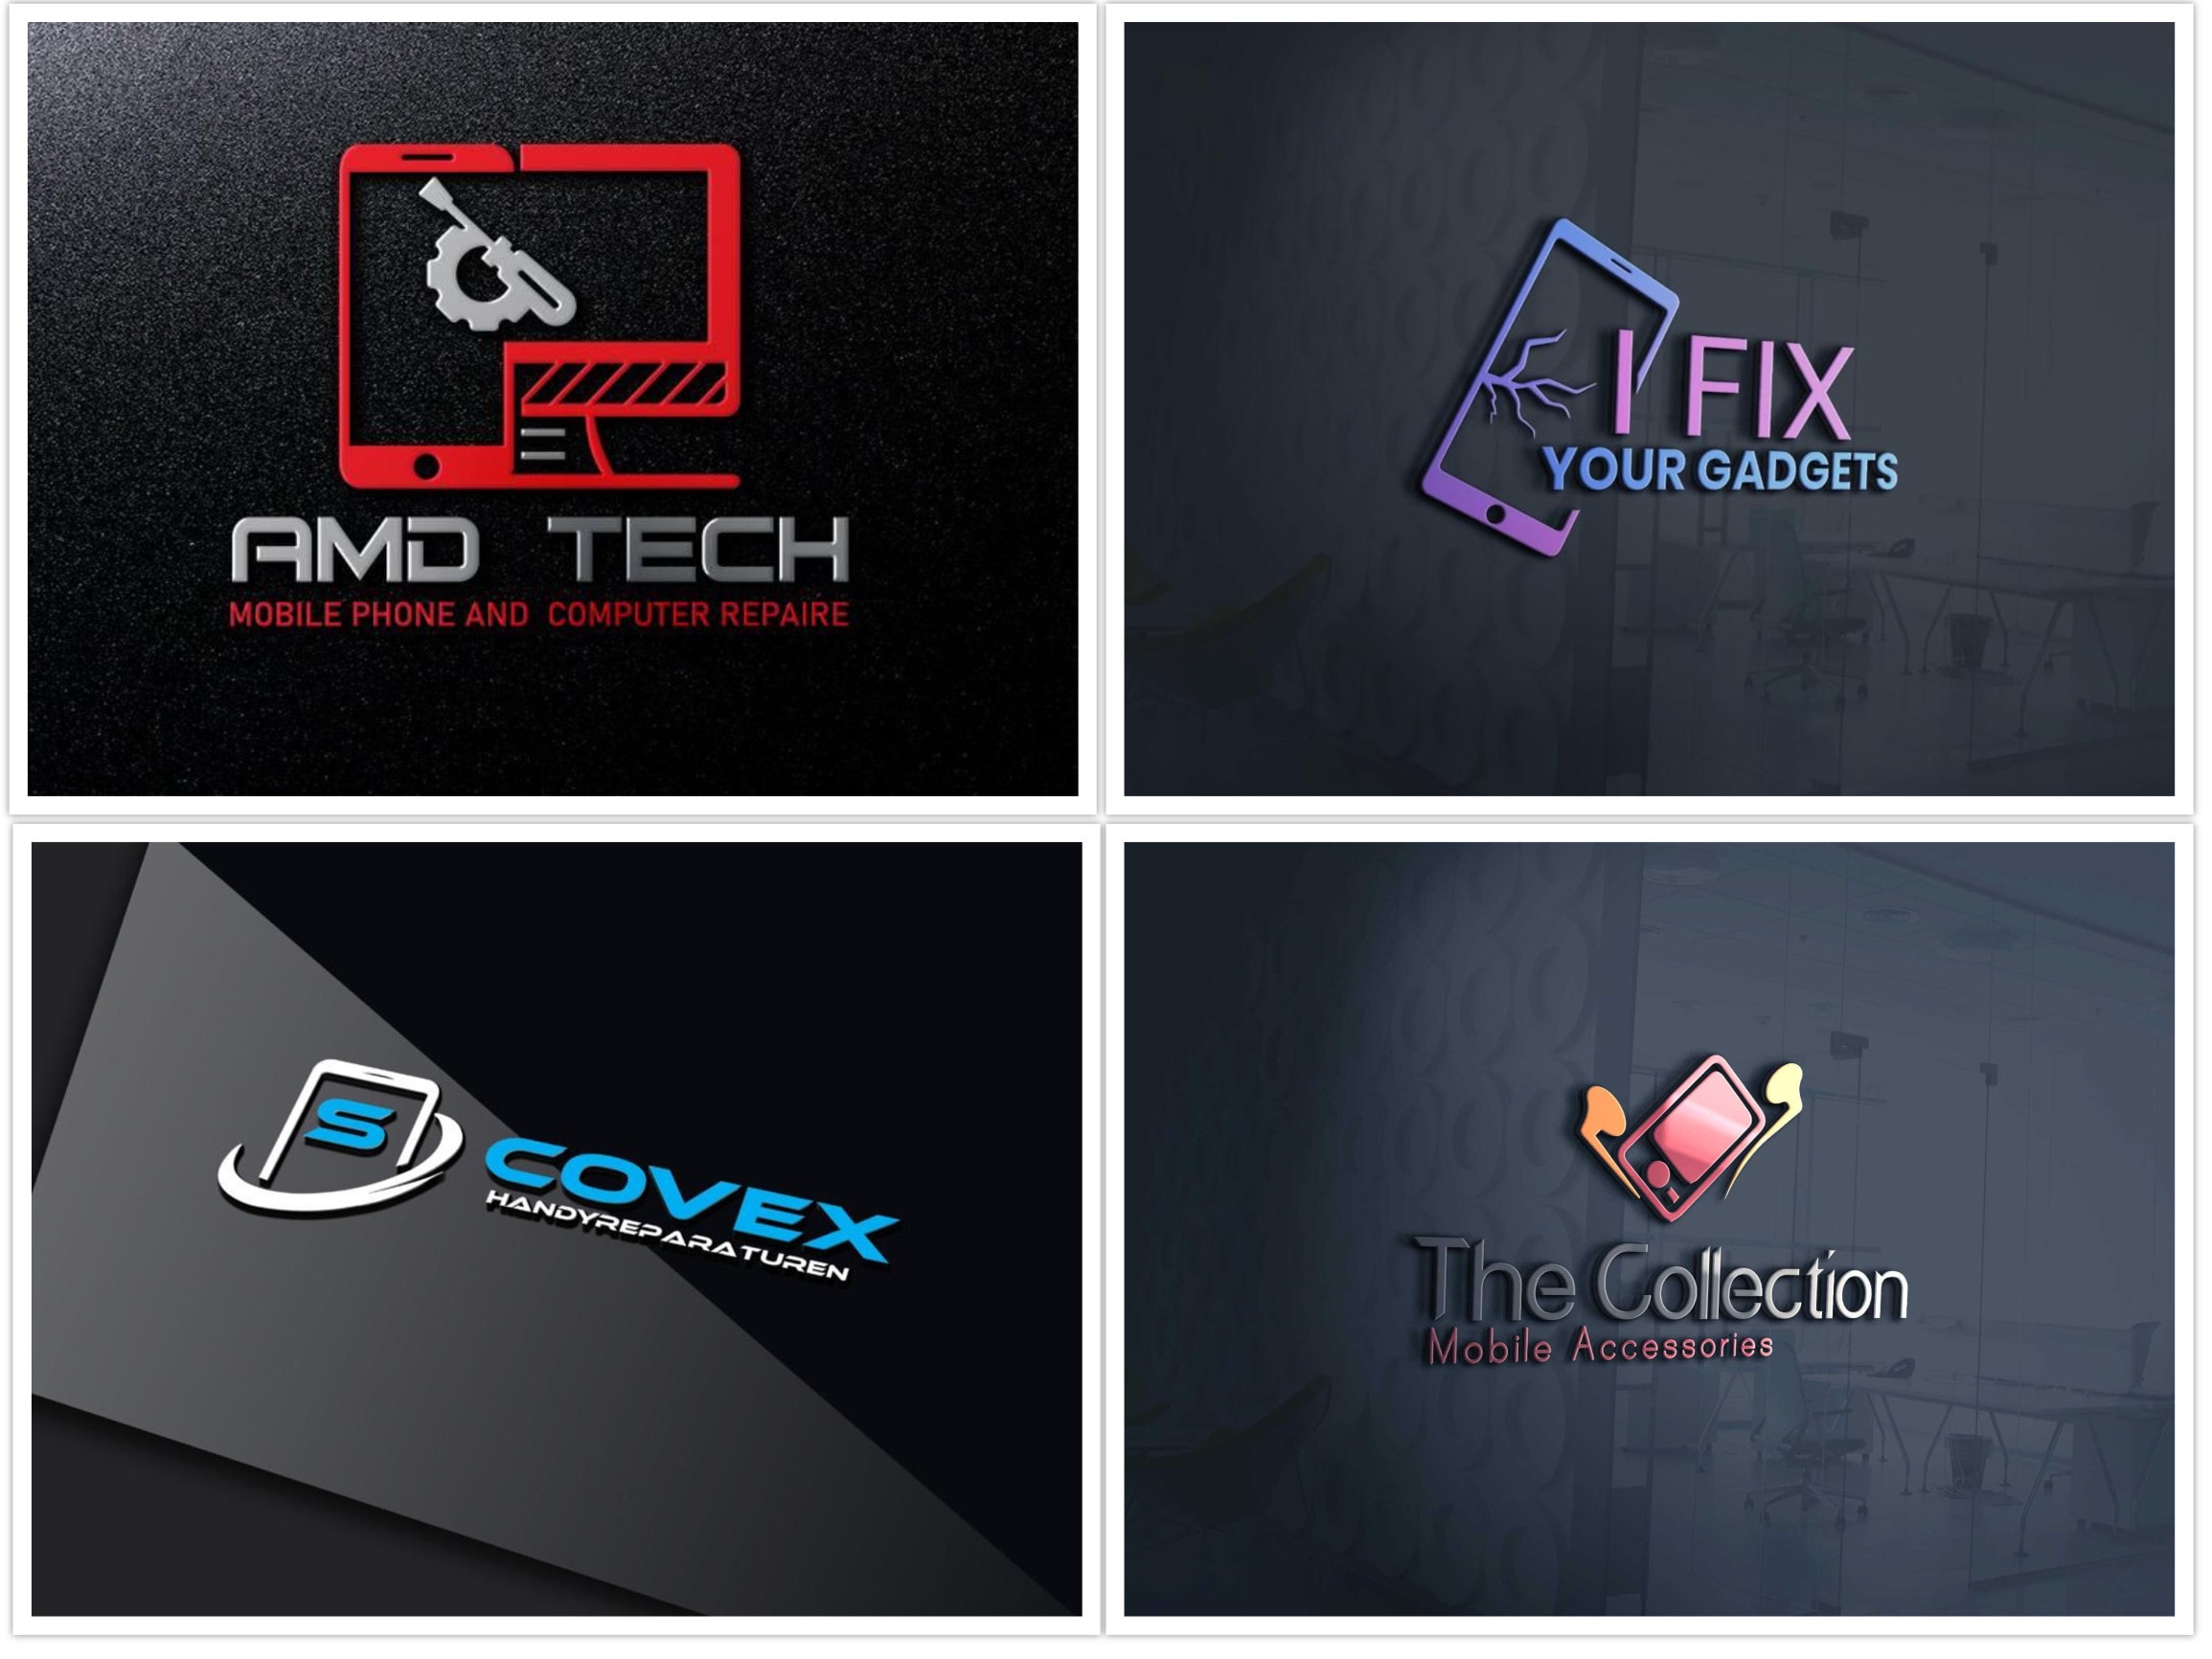 Design phone repairing shop, accessories store logo by Logoxtudio | Fiverr